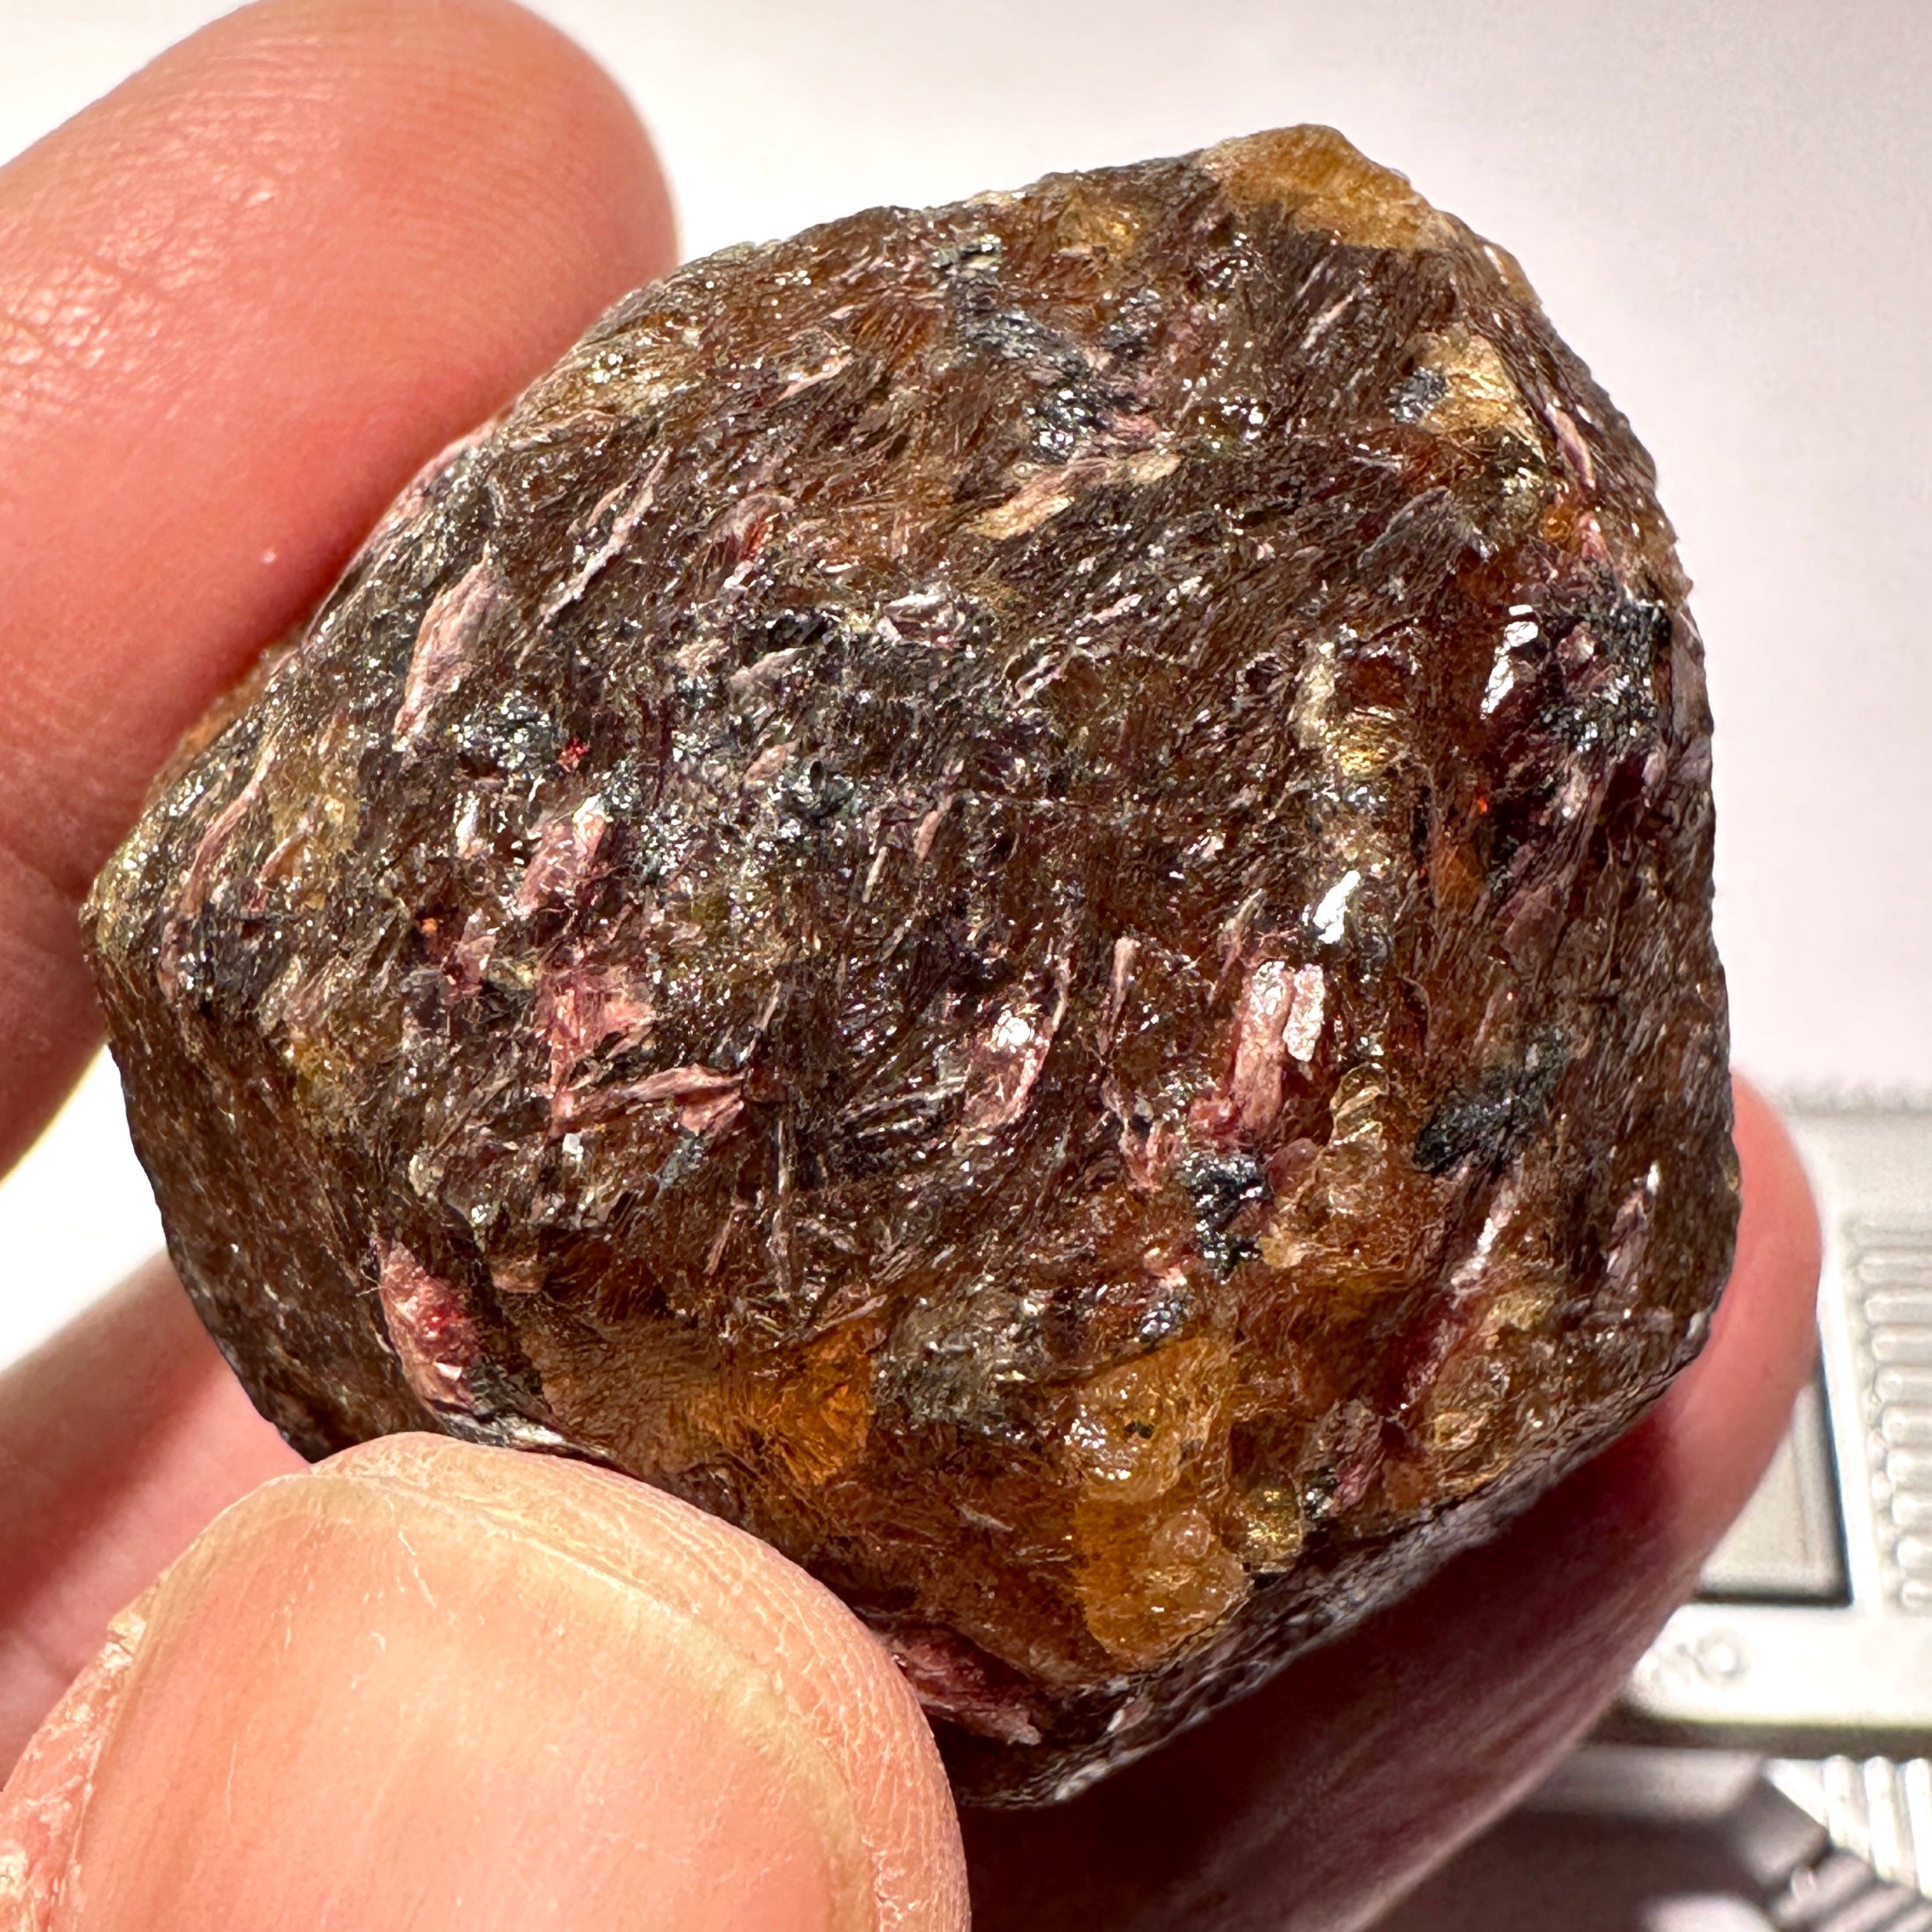 98gm / 490ct Mandarin Spessartite Garnet Crystal, Loliondo in Tanzania. 35.2 X 36.4 X 36.2mm, Untreated Unheated